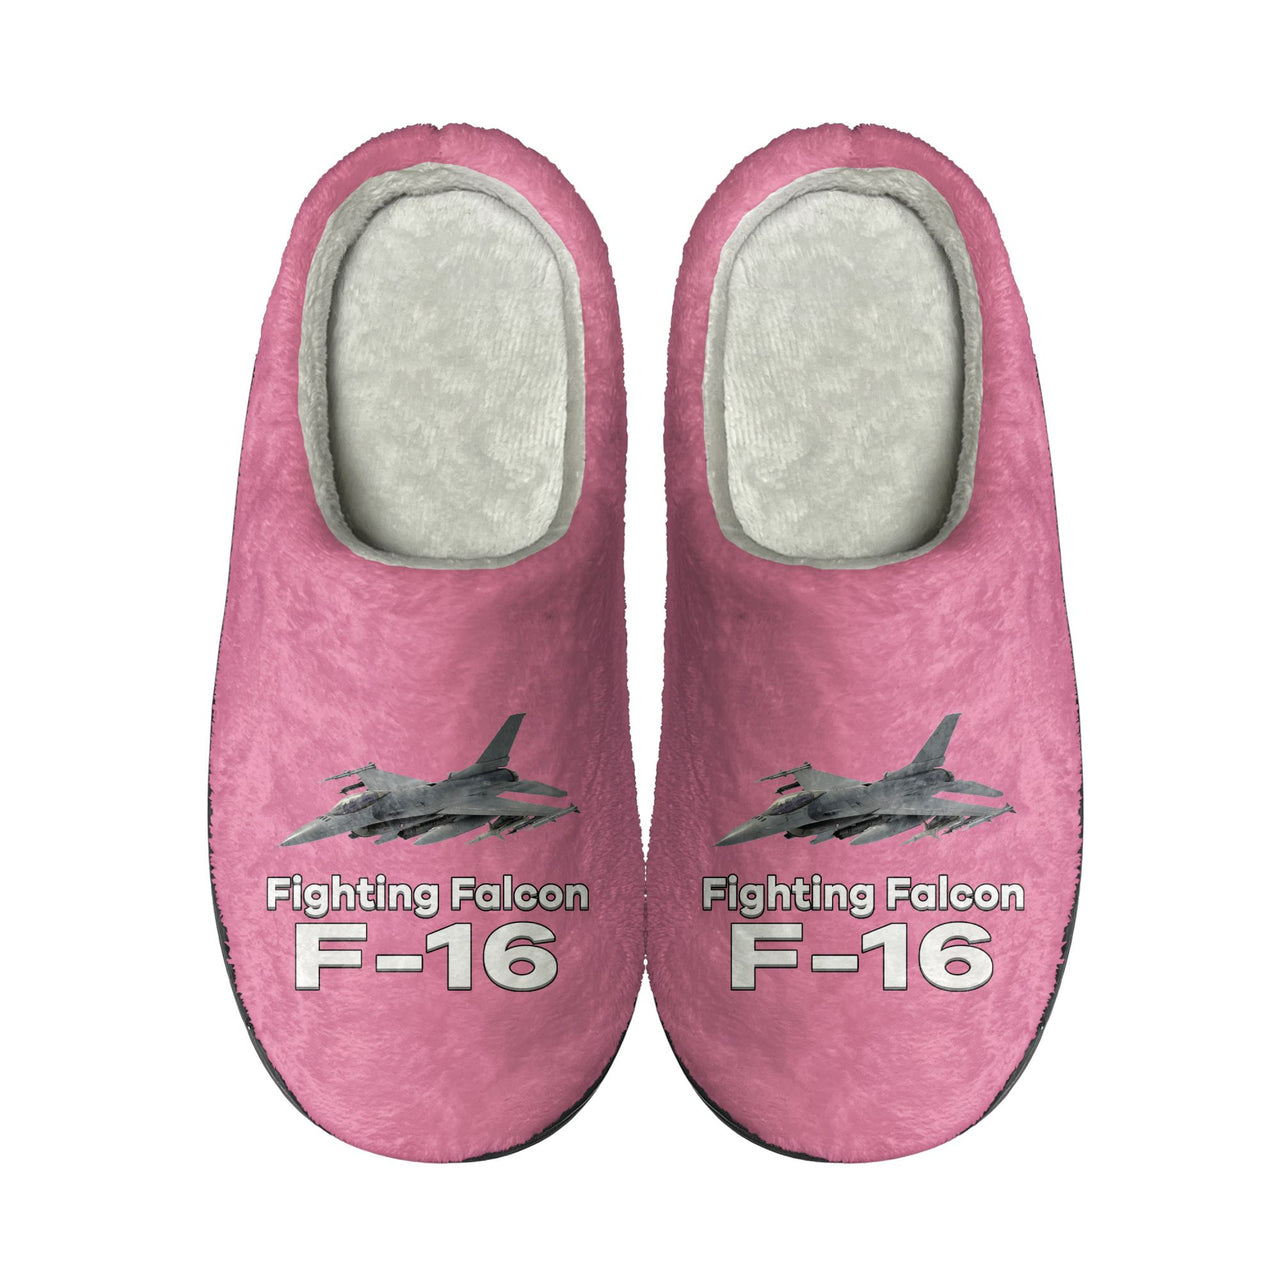 The Fighting Falcon F16 Designed Cotton Slippers